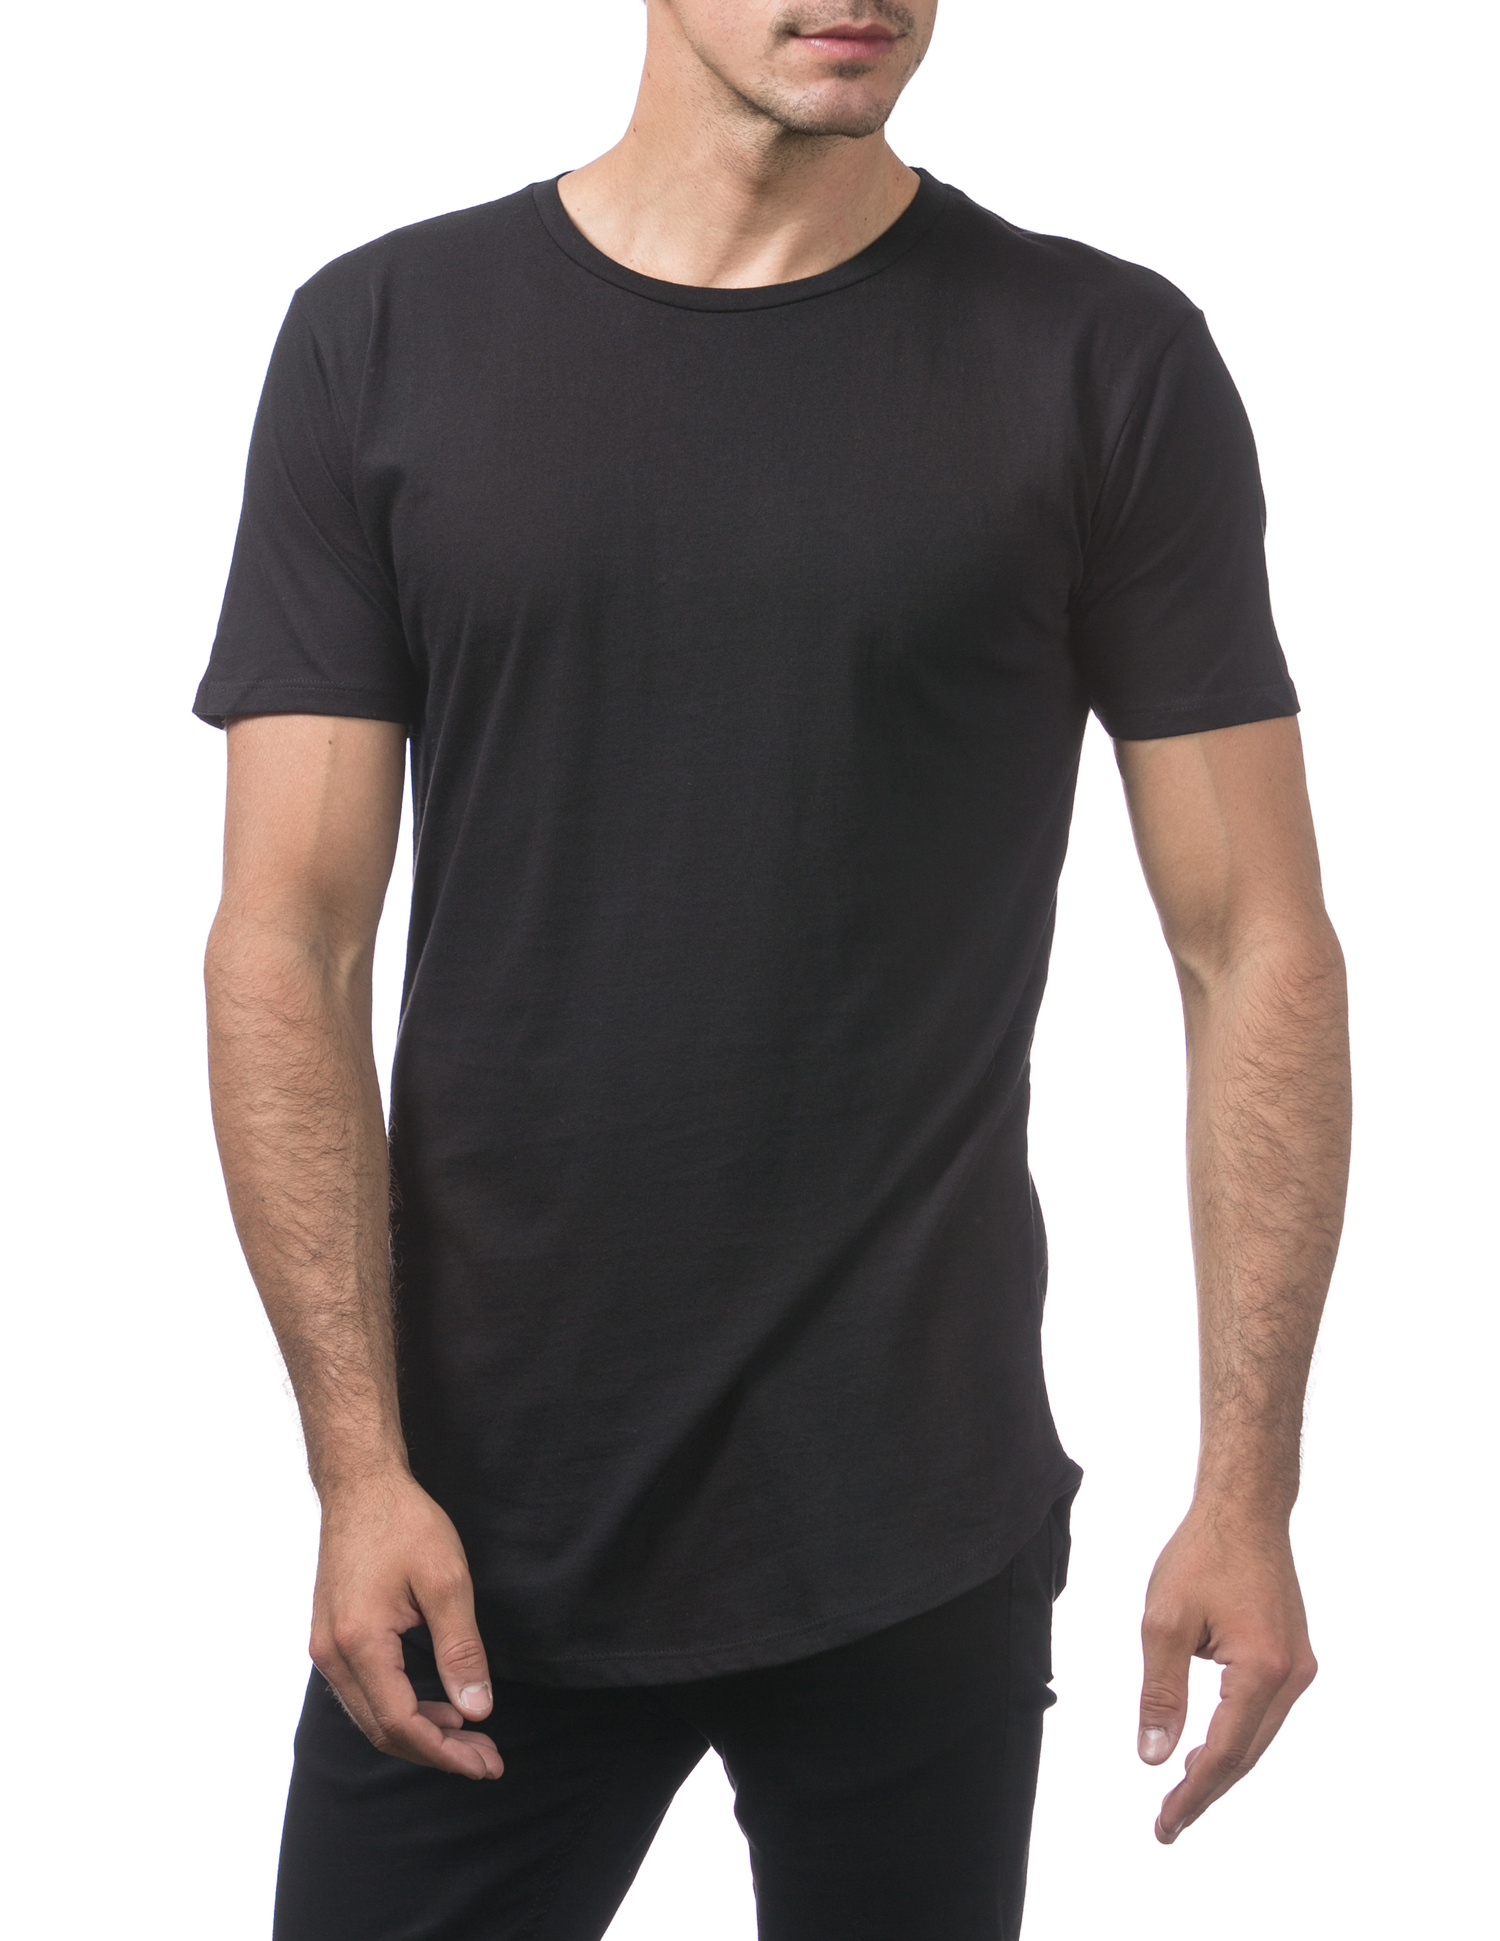 108 BLACK Longline Curved Hem Short Sleeve T-Shirt - Lightweight